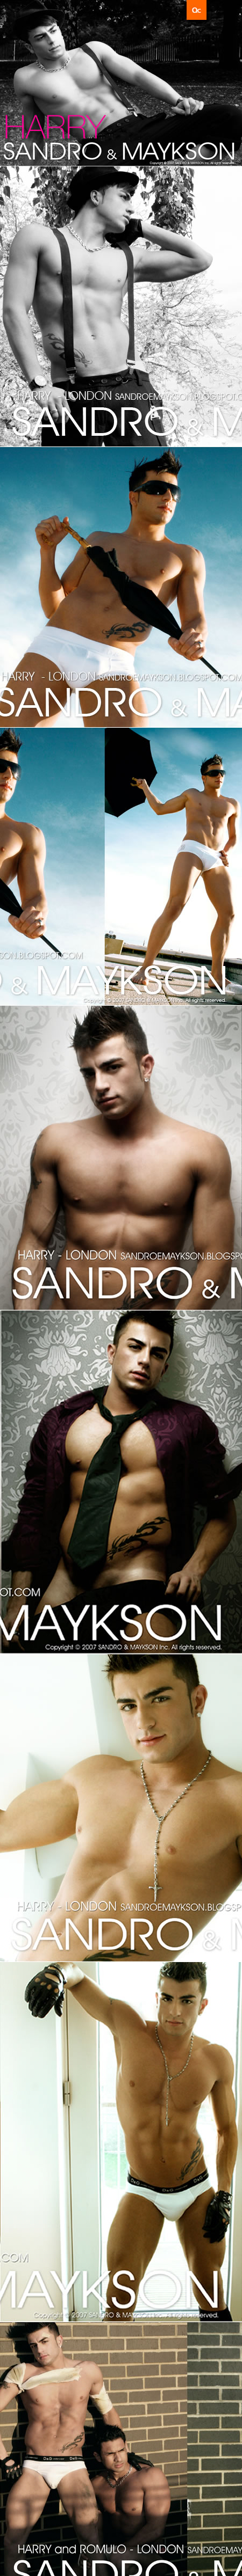 Harry para Sandro y Maykson